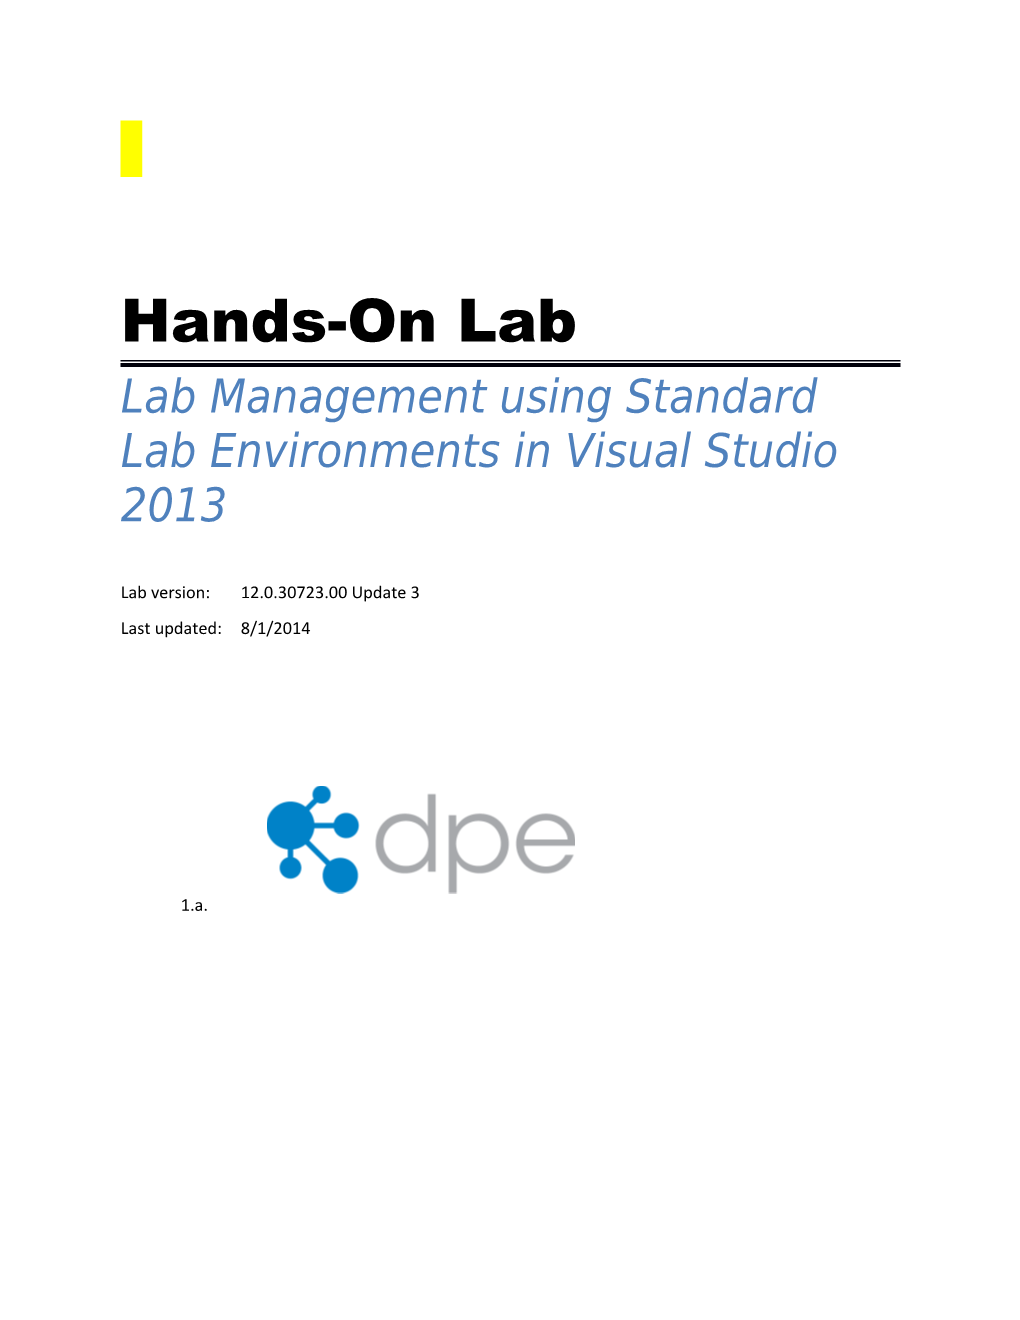 Lab Management Using Standard Lab Environments in Visual Studio 2013